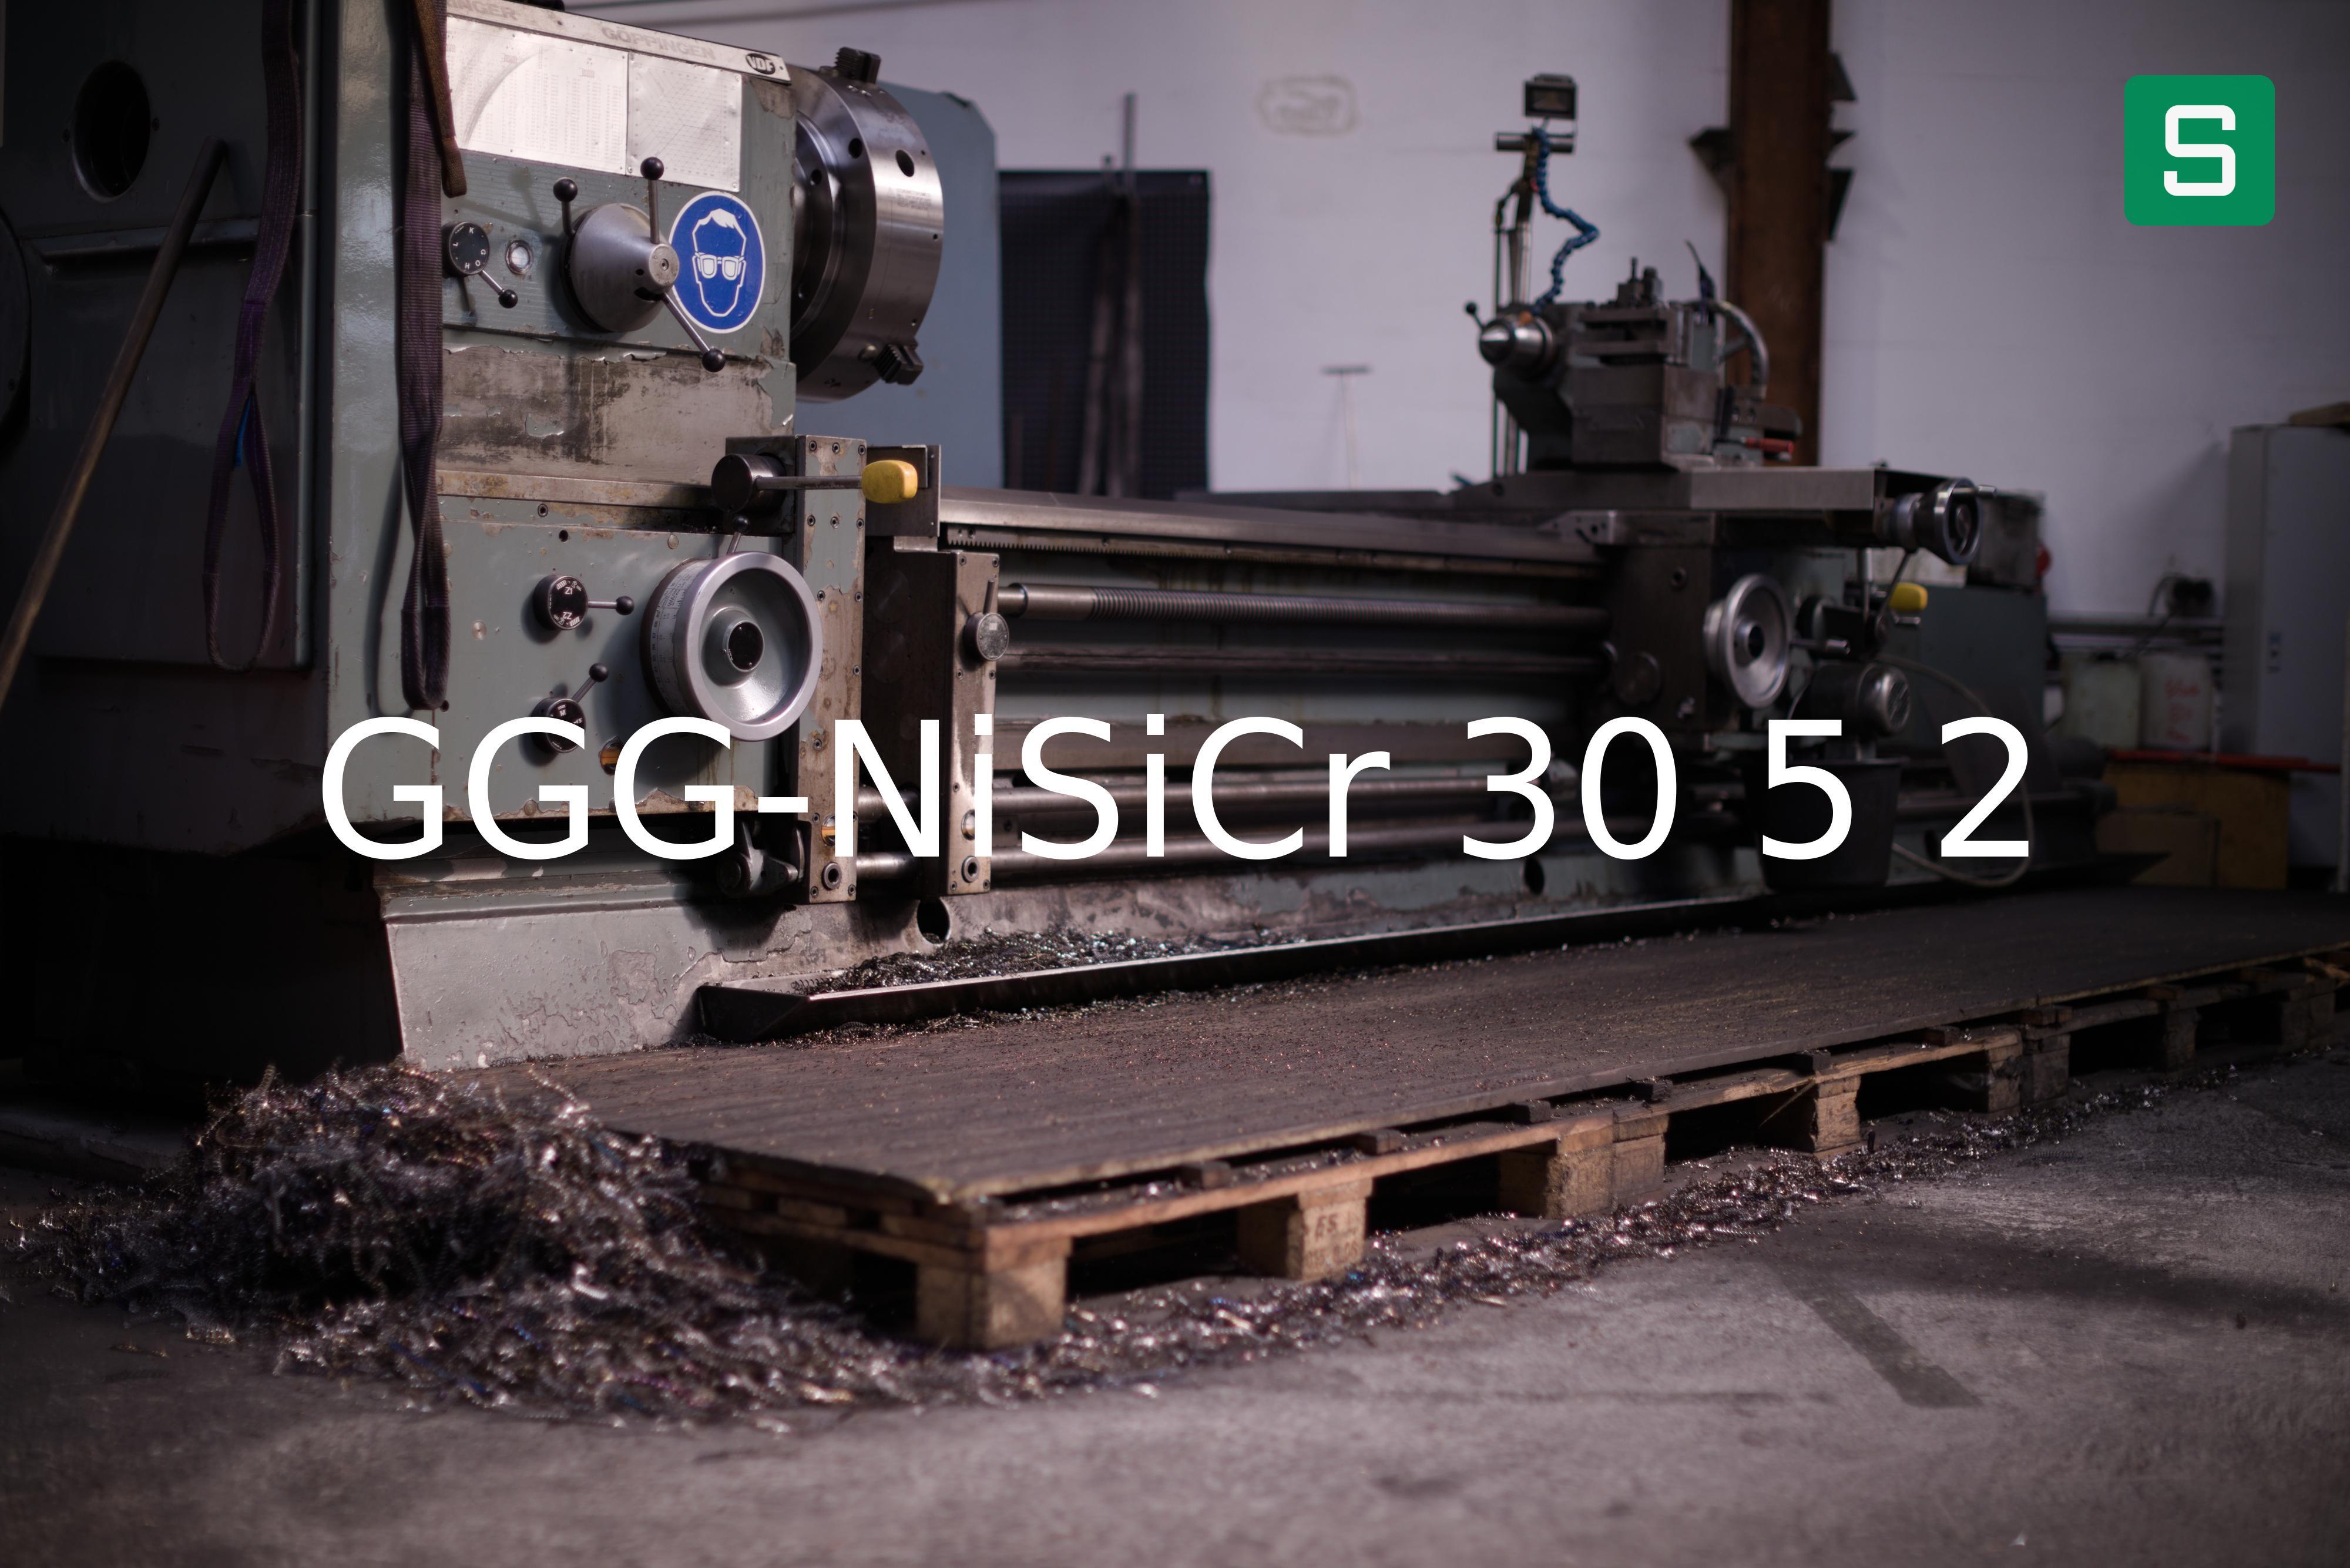 Steel Material: GGG-NiSiCr 30 5 2